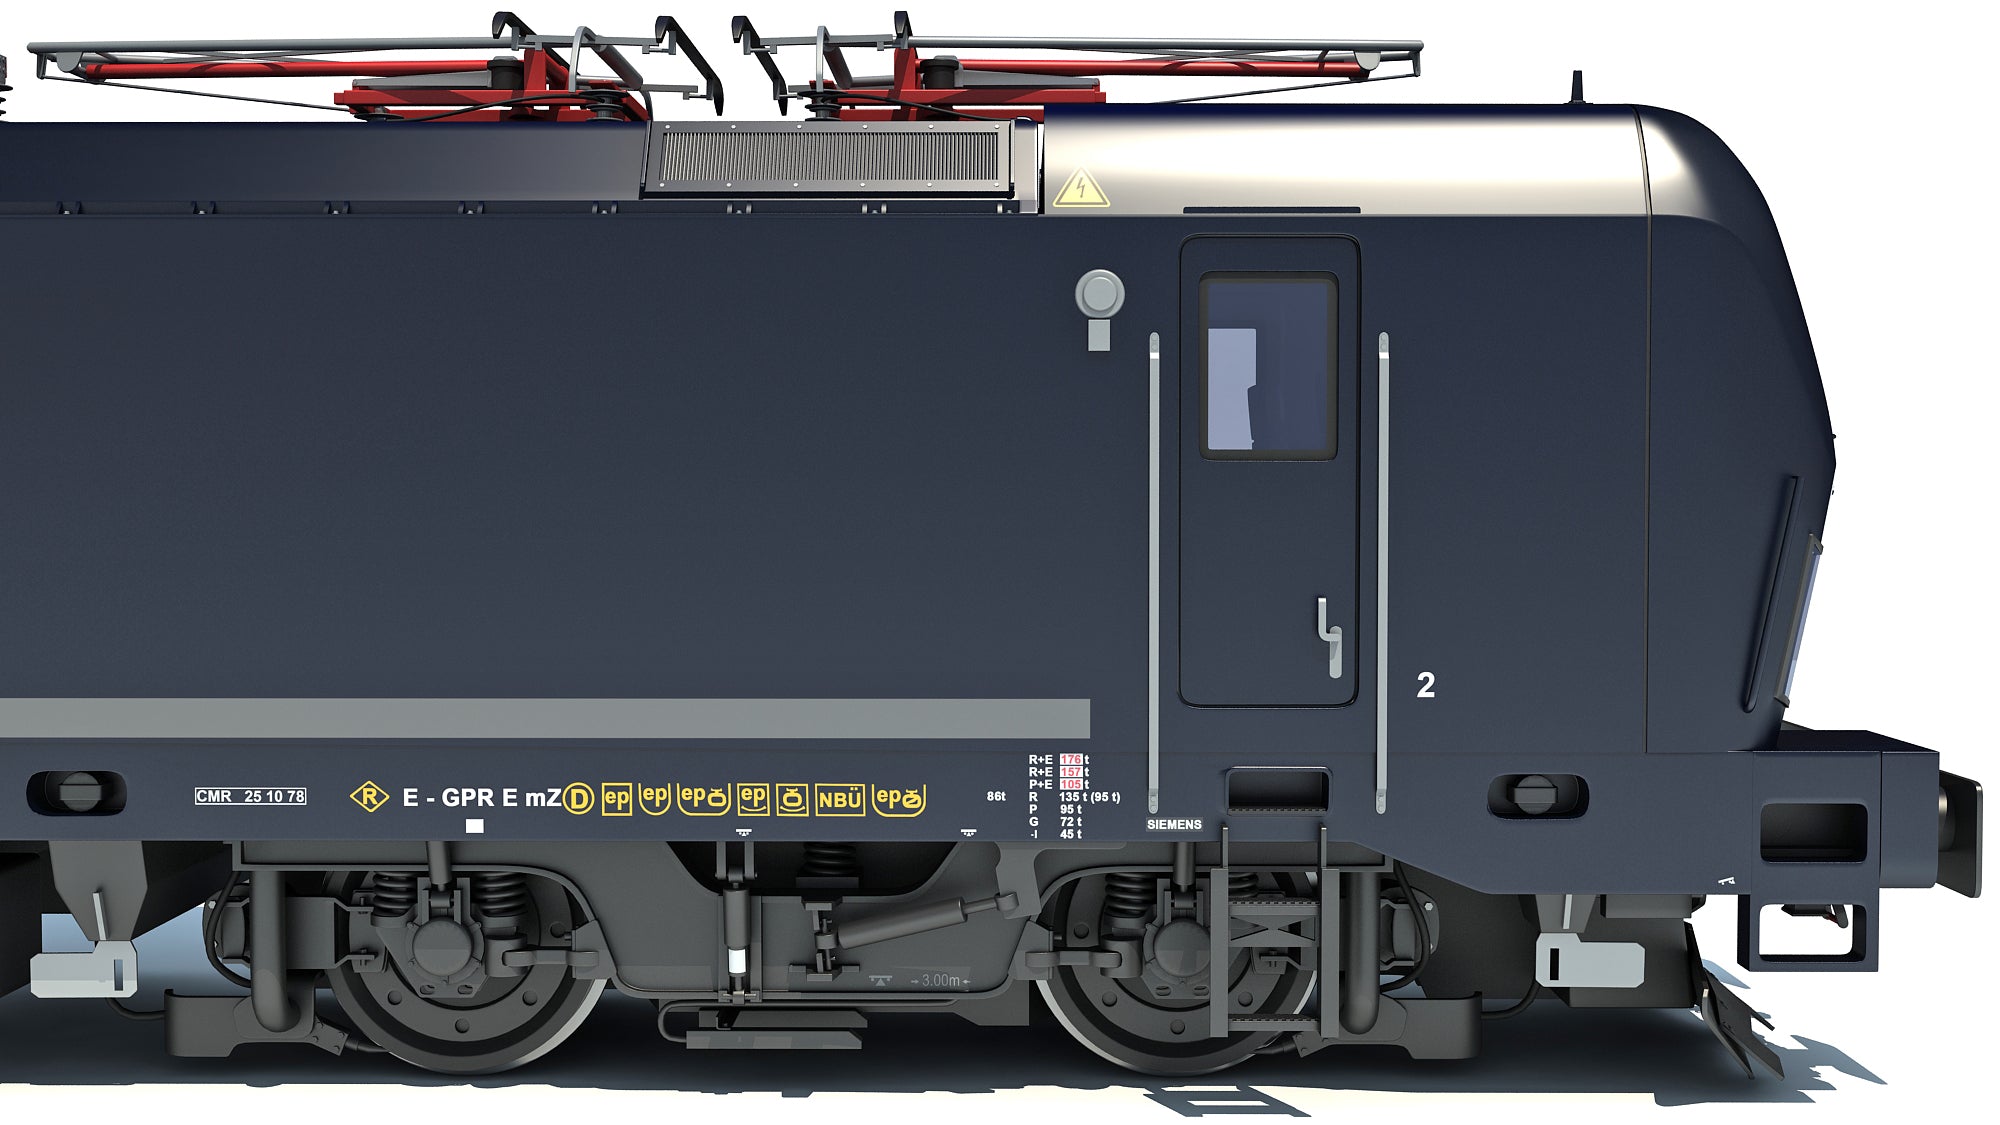 MRCE Siemens Vectron Locomotive